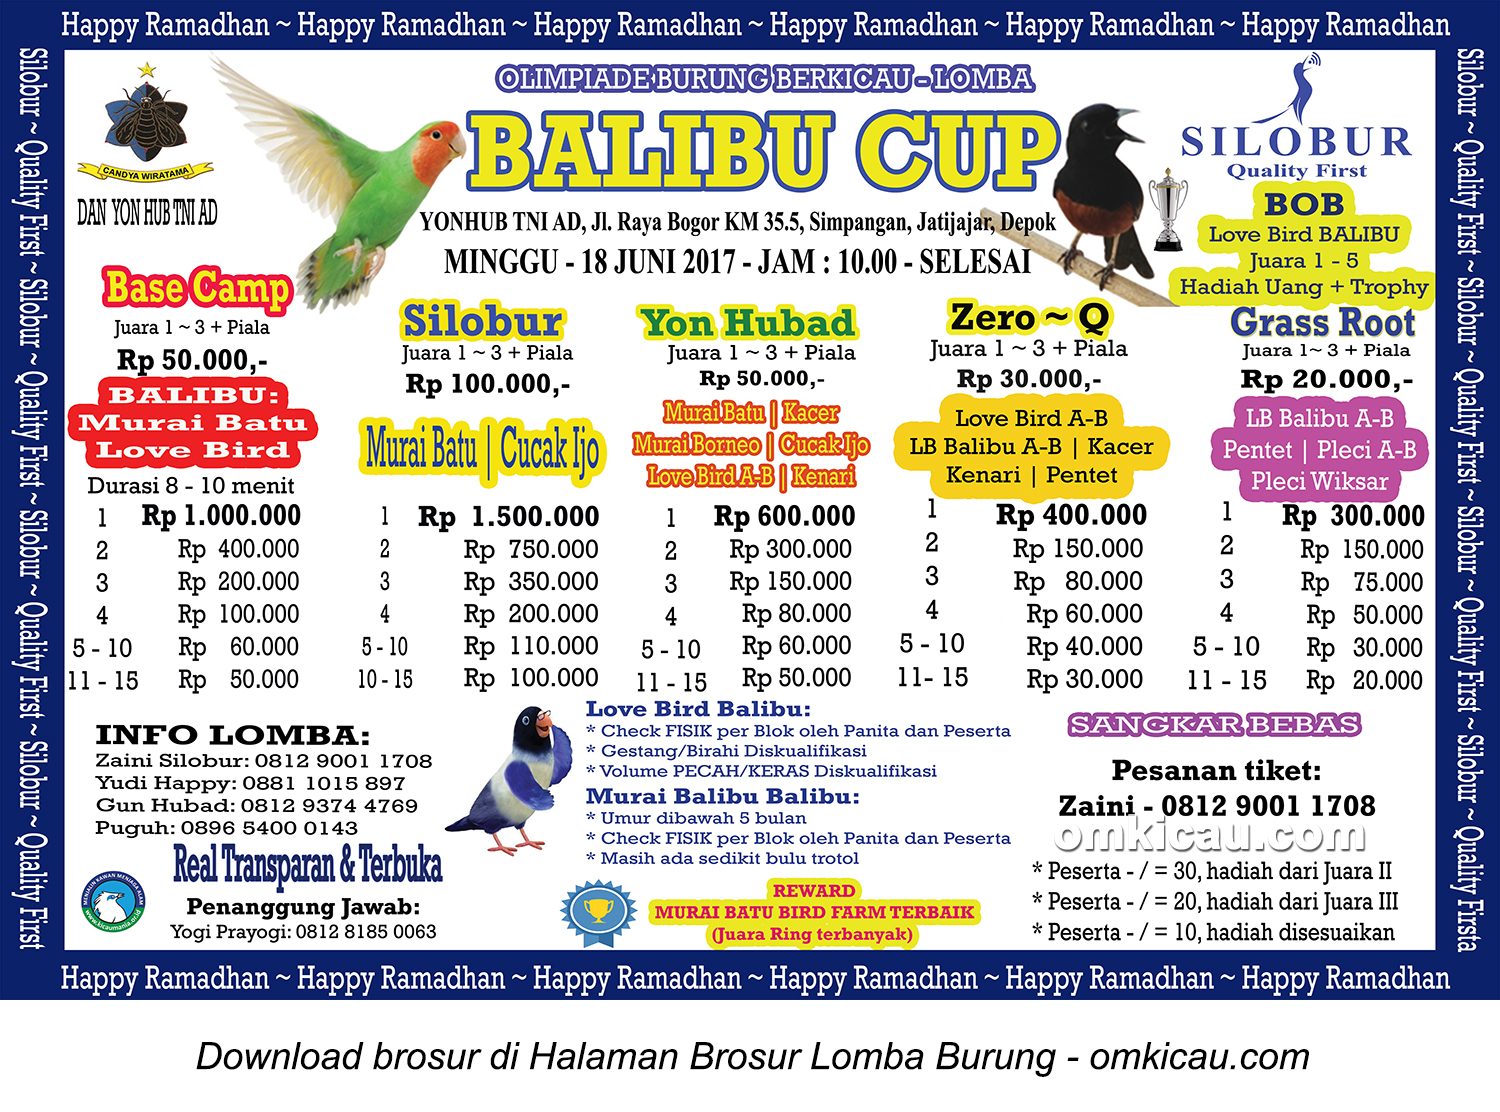 Brosur Lomba Burung Berkicau Balibu Cup, Depok, 18 Juni 2017